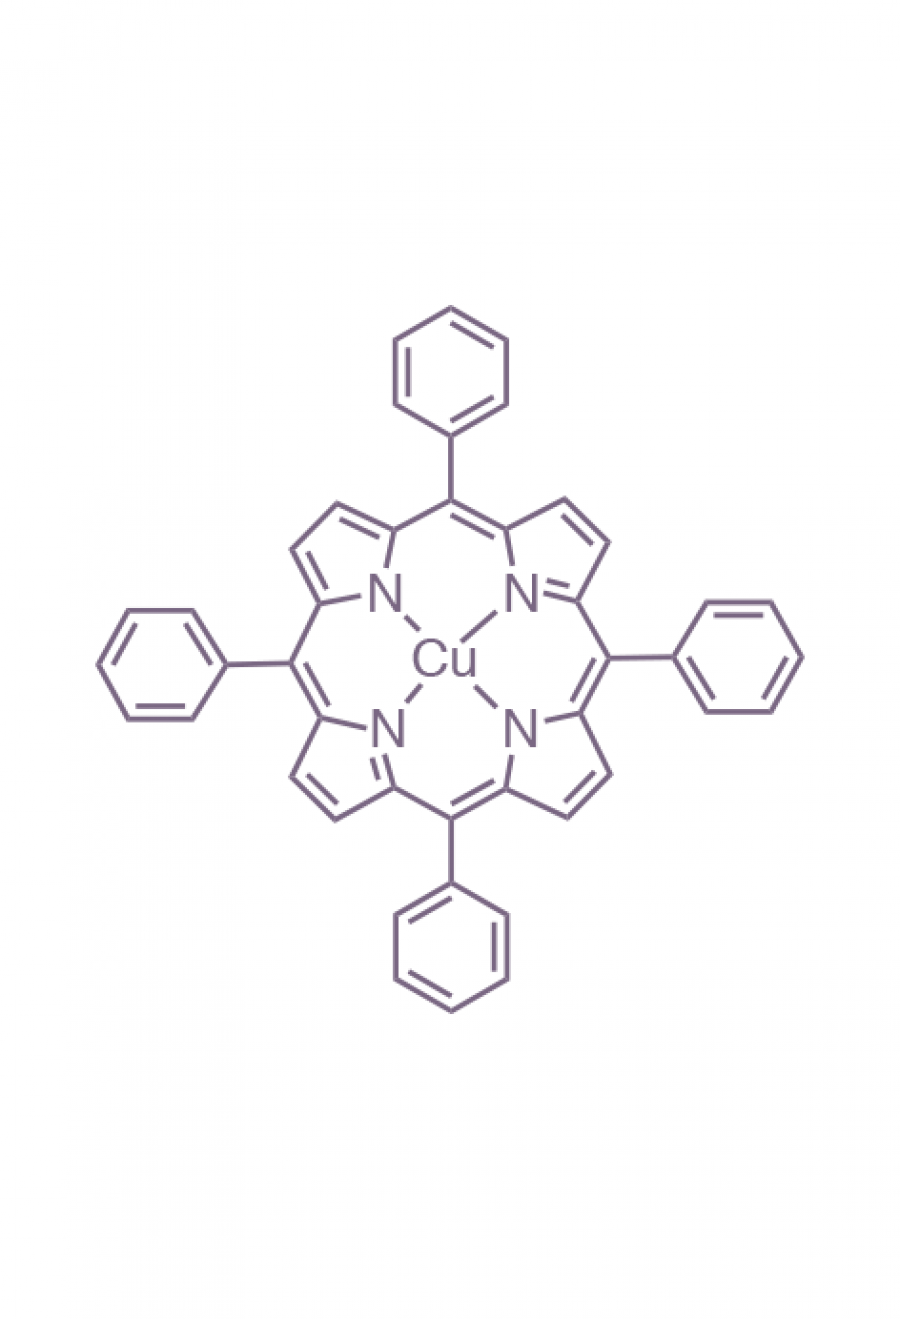 copper(II) 5,10,15,20-(tetraphenyl)porphyrin  | Porphychem Expert porphyrin synthesis for research & industry